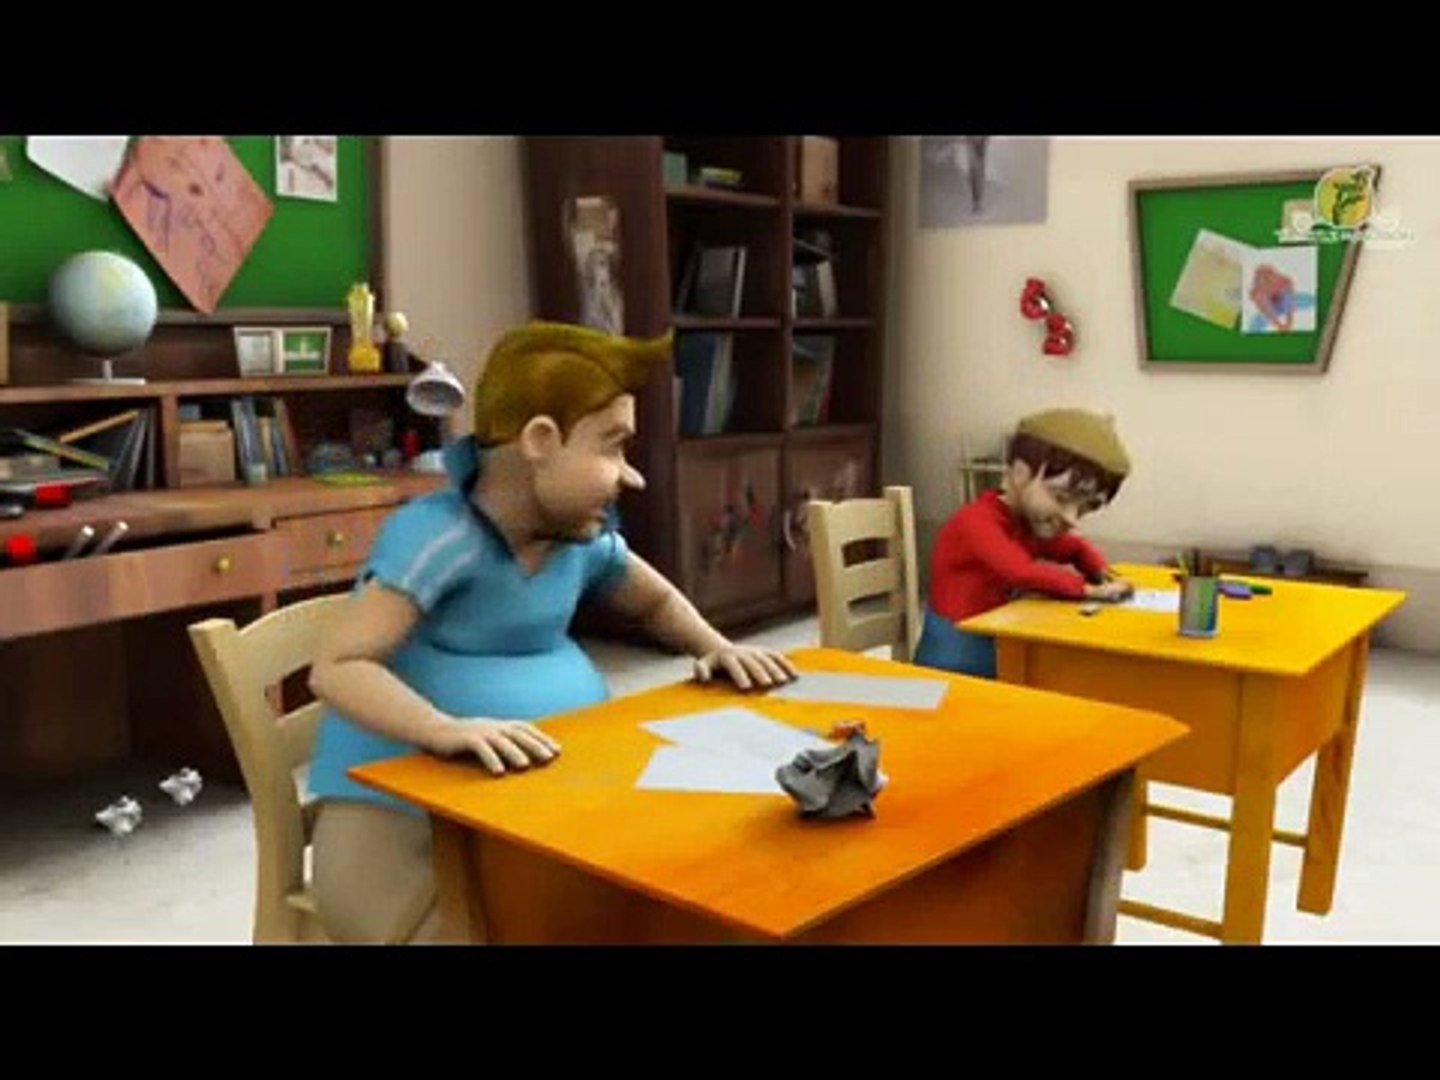 BULLY (A Short Animation film)